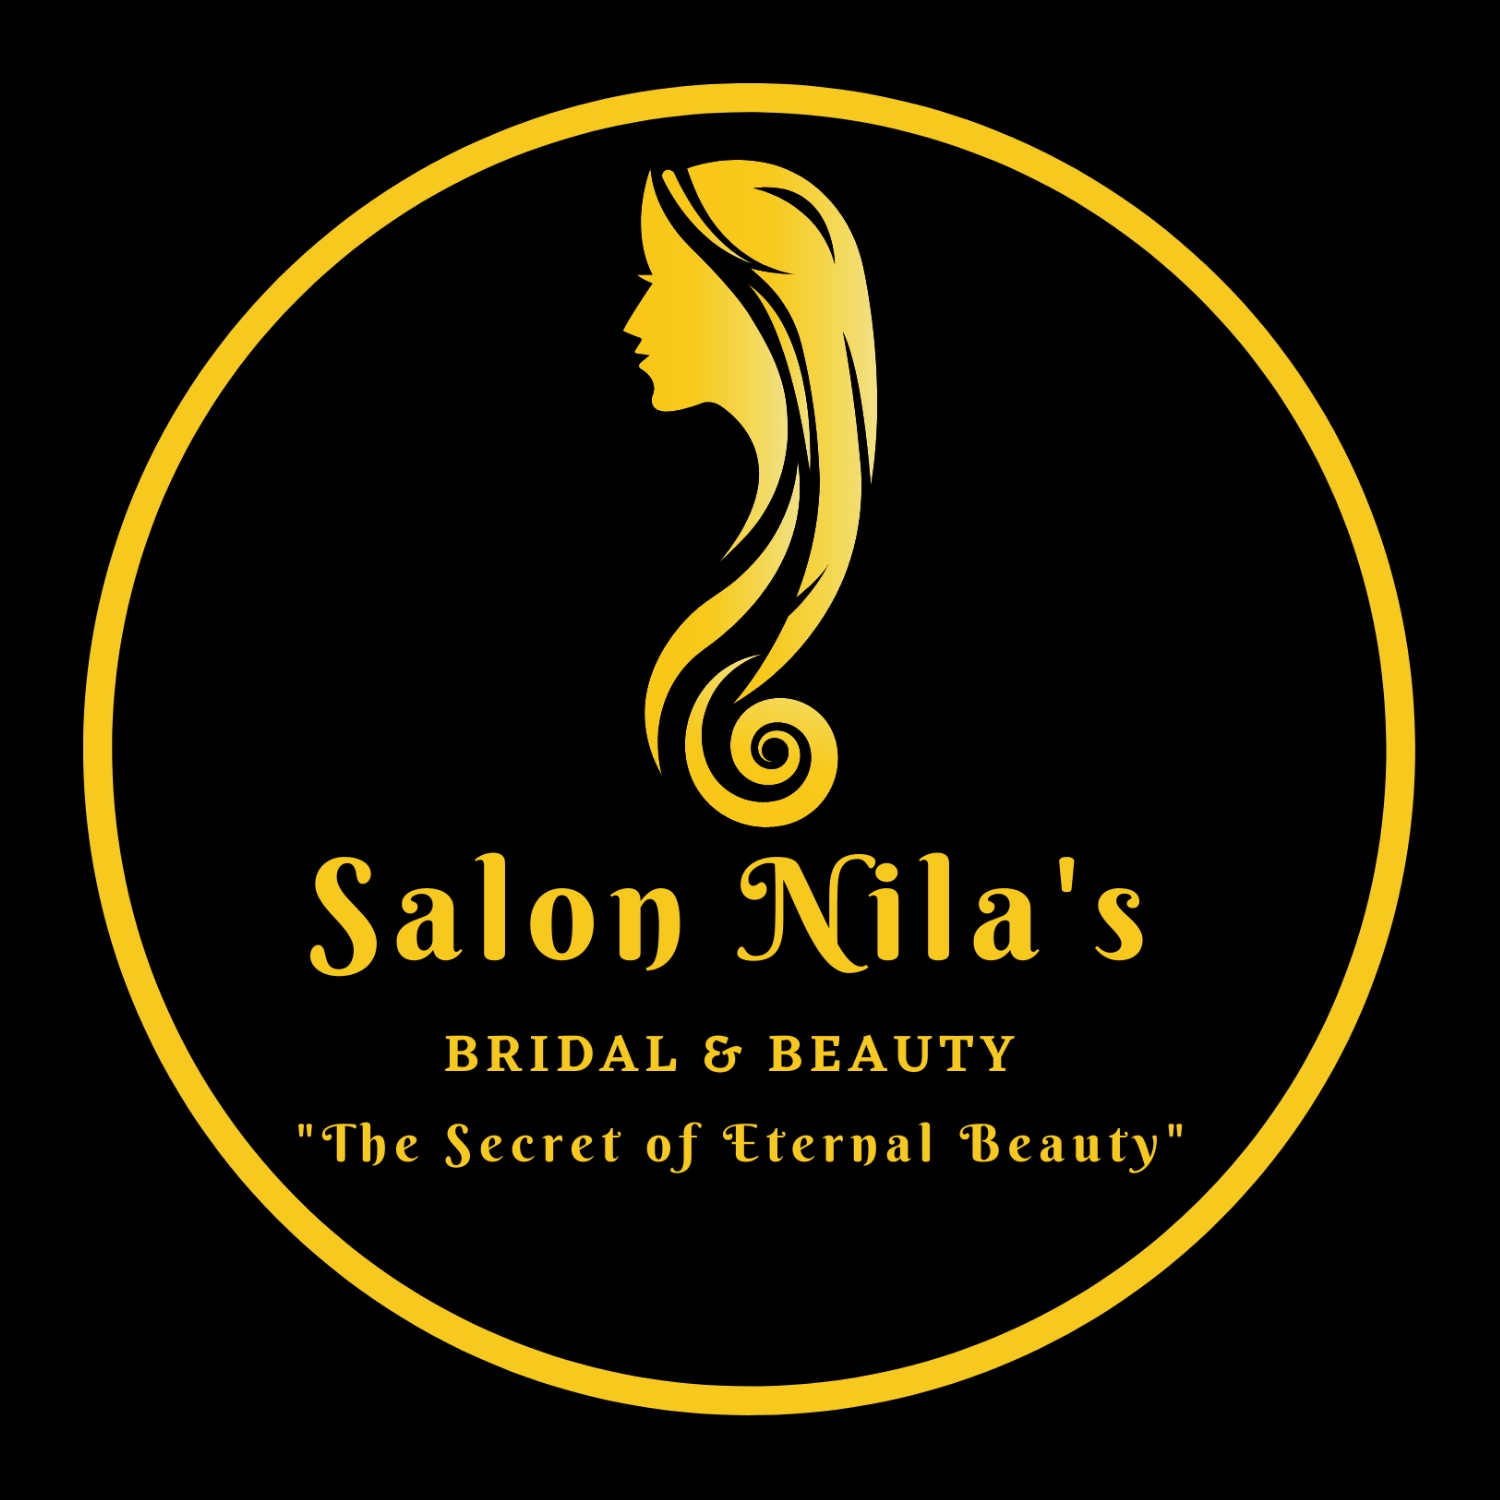 Salon Nila's Bridal & Beauty